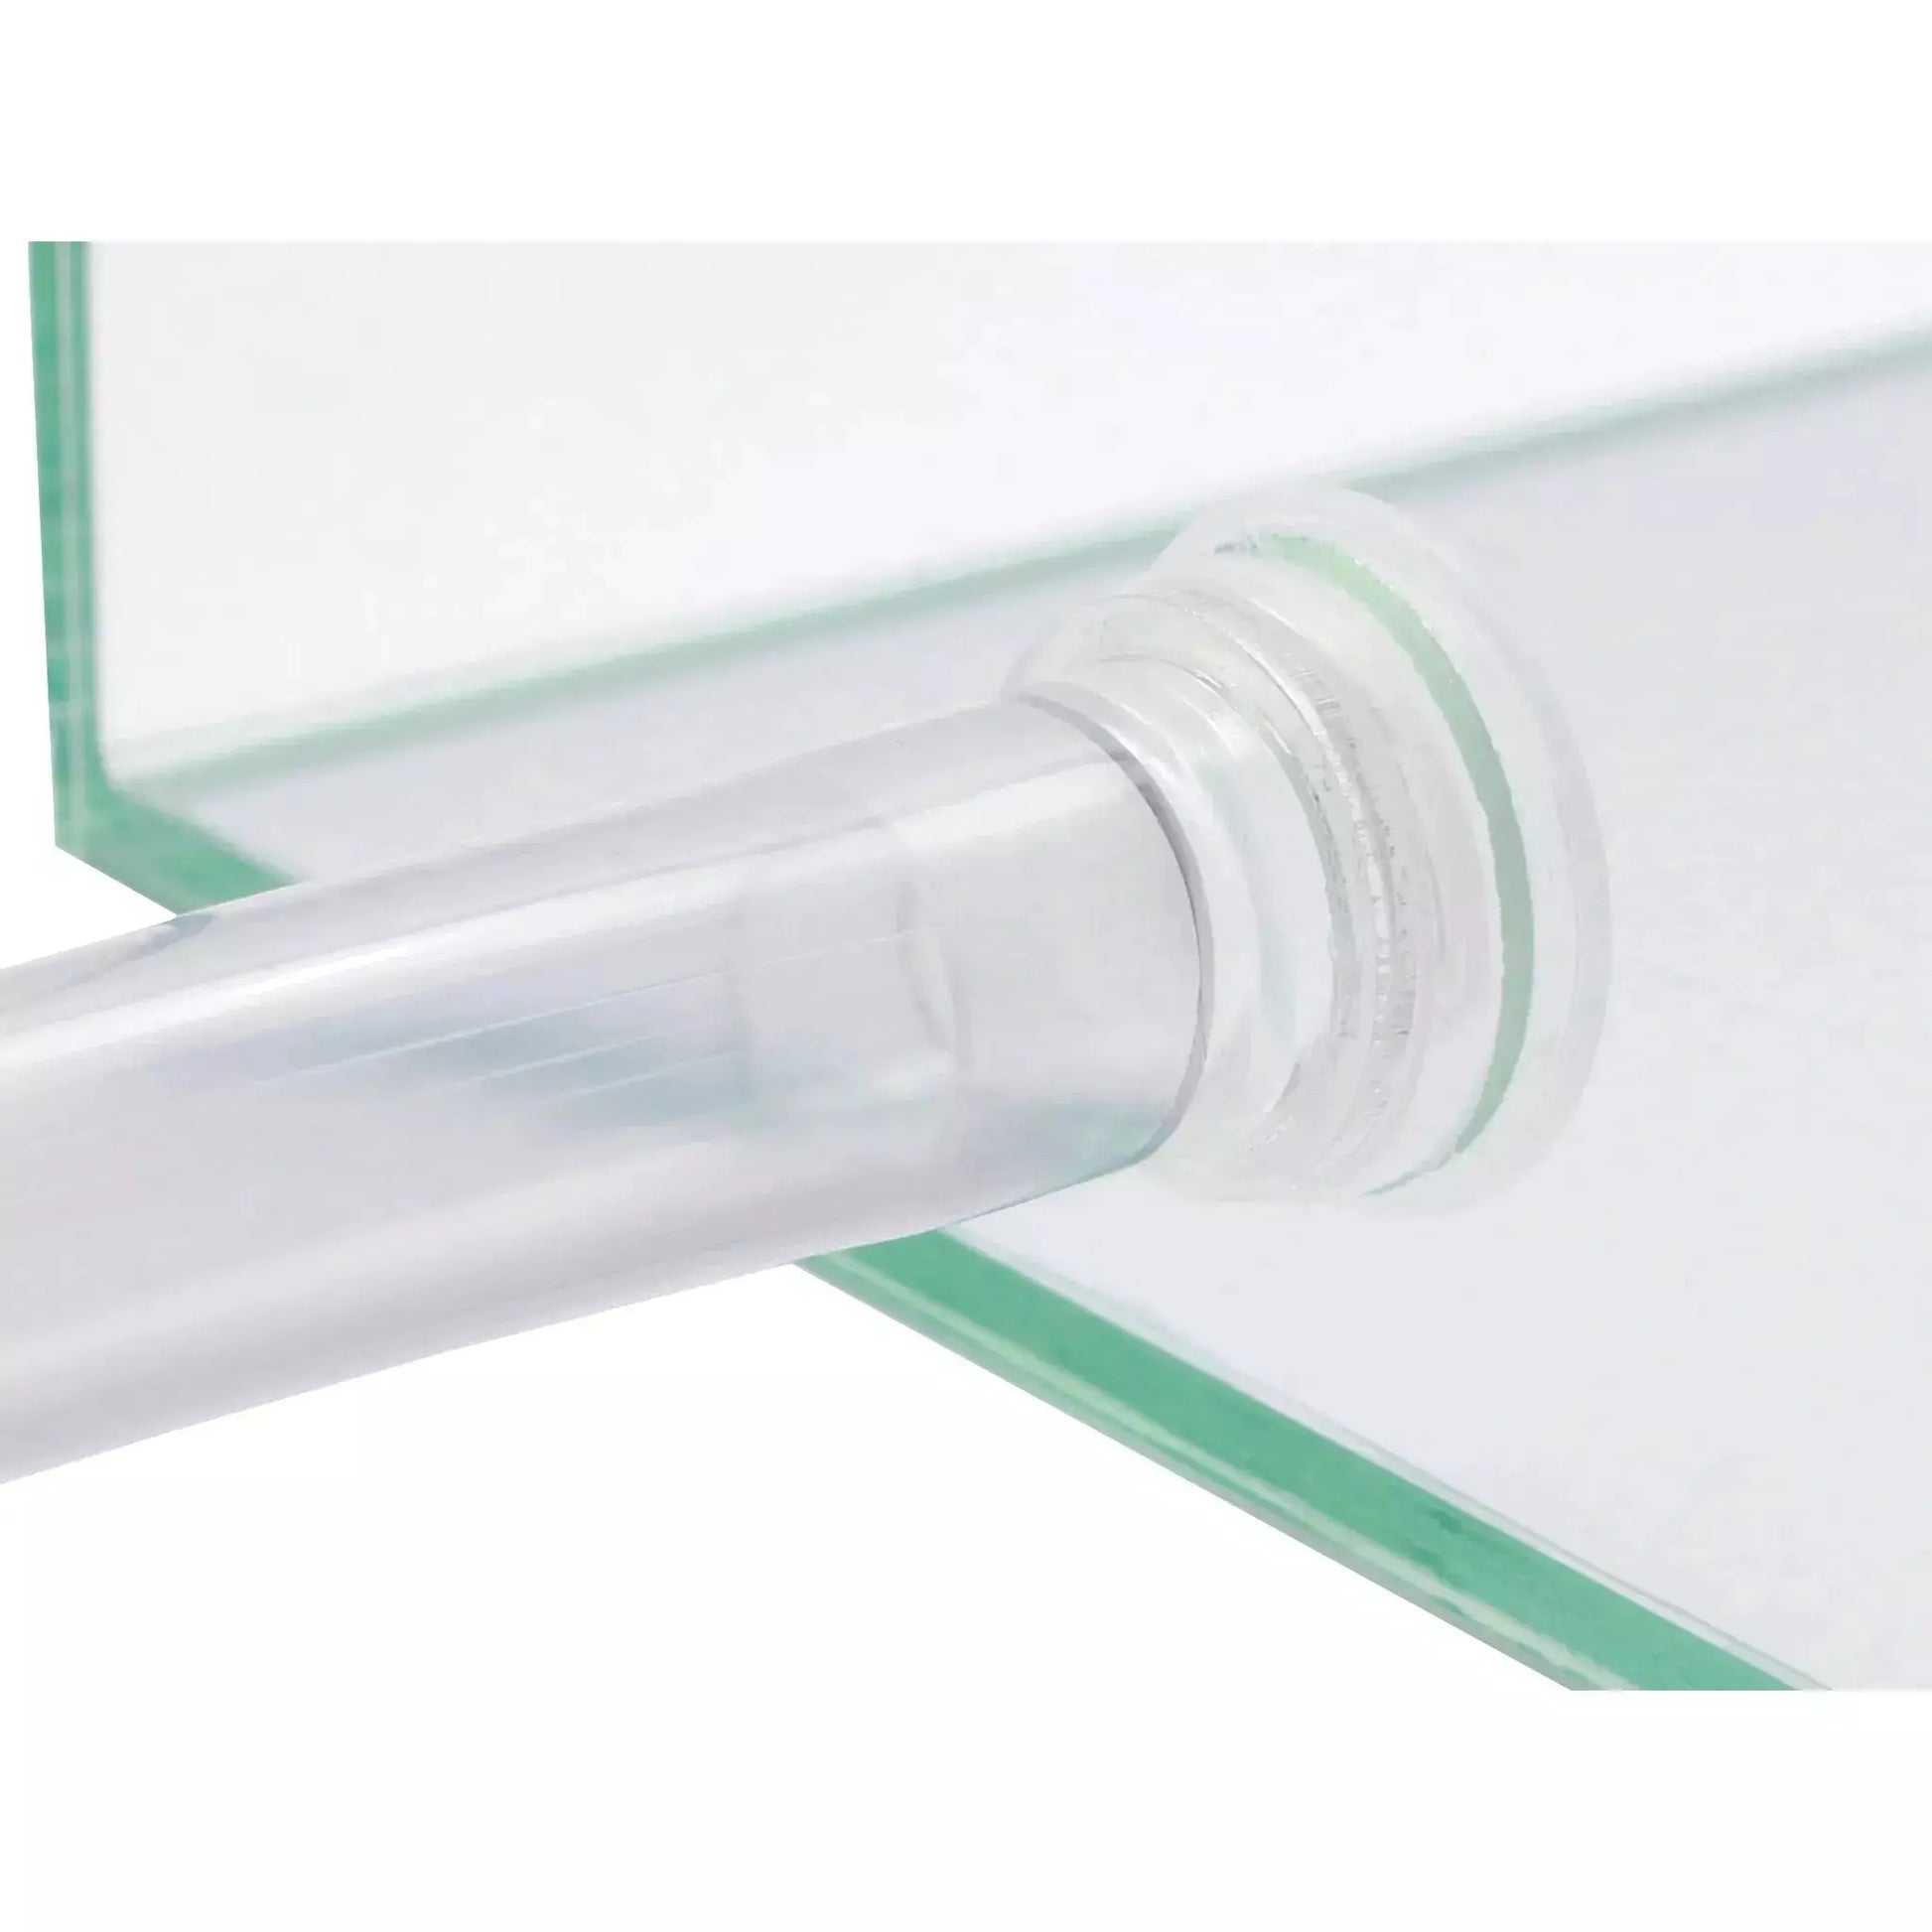 Basin hose connector 27mm – 14, 16, 20 mm – transparent Antcube